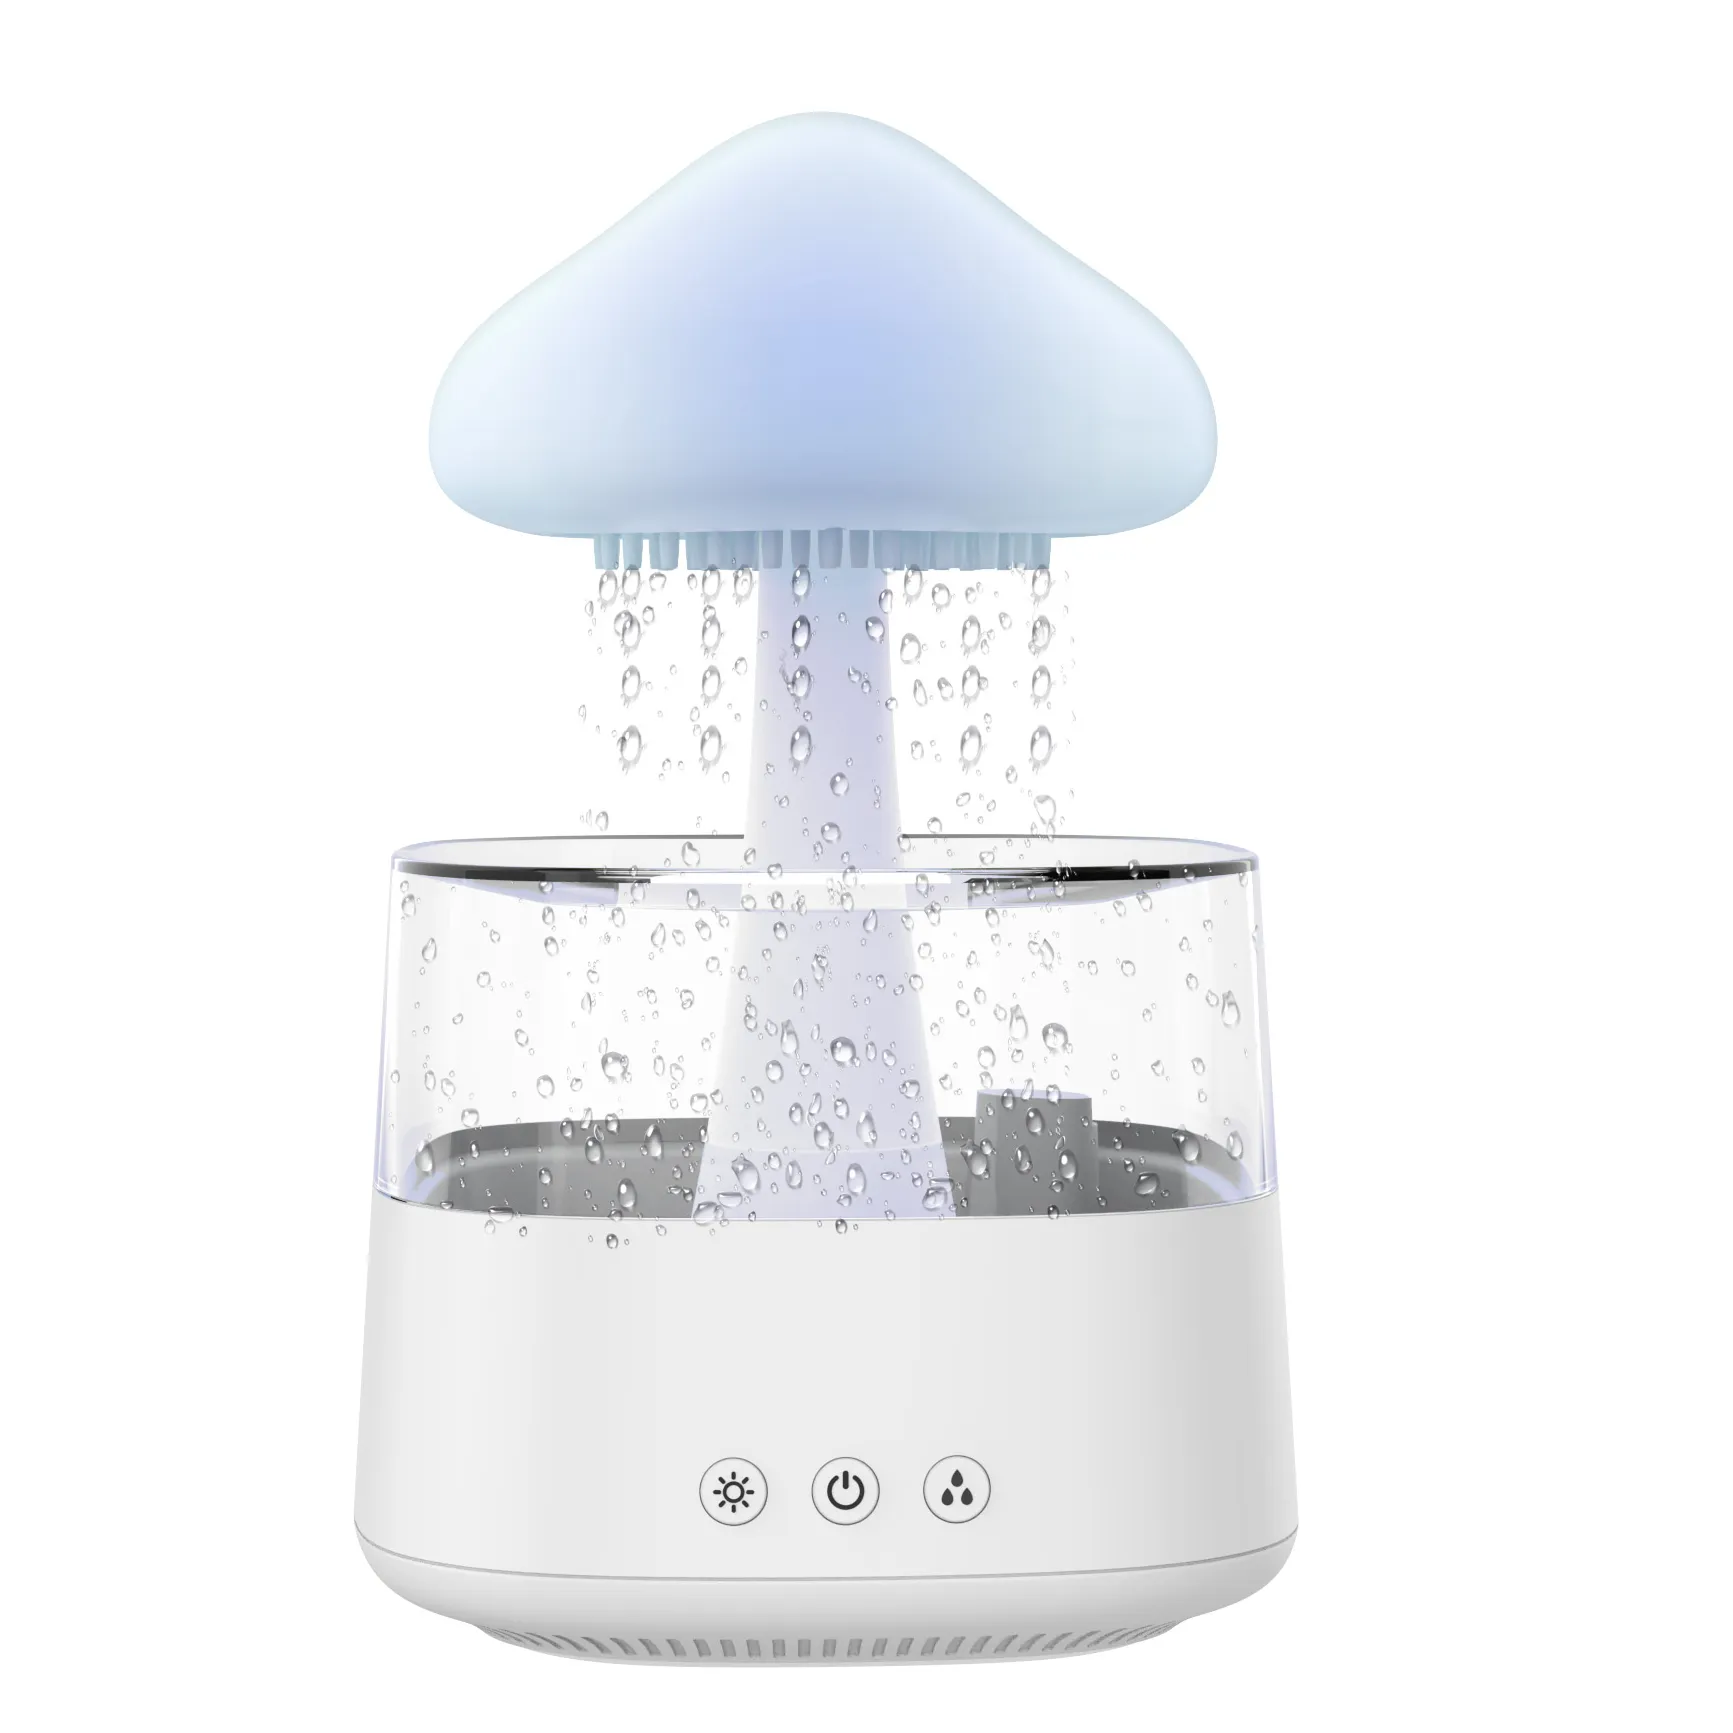 Customize Crisp Water Drip Sound Cloud Raindrop Humidifier Adjustable Water Flow Speed 7 Color Light Rain Frop Cloud Humidifier